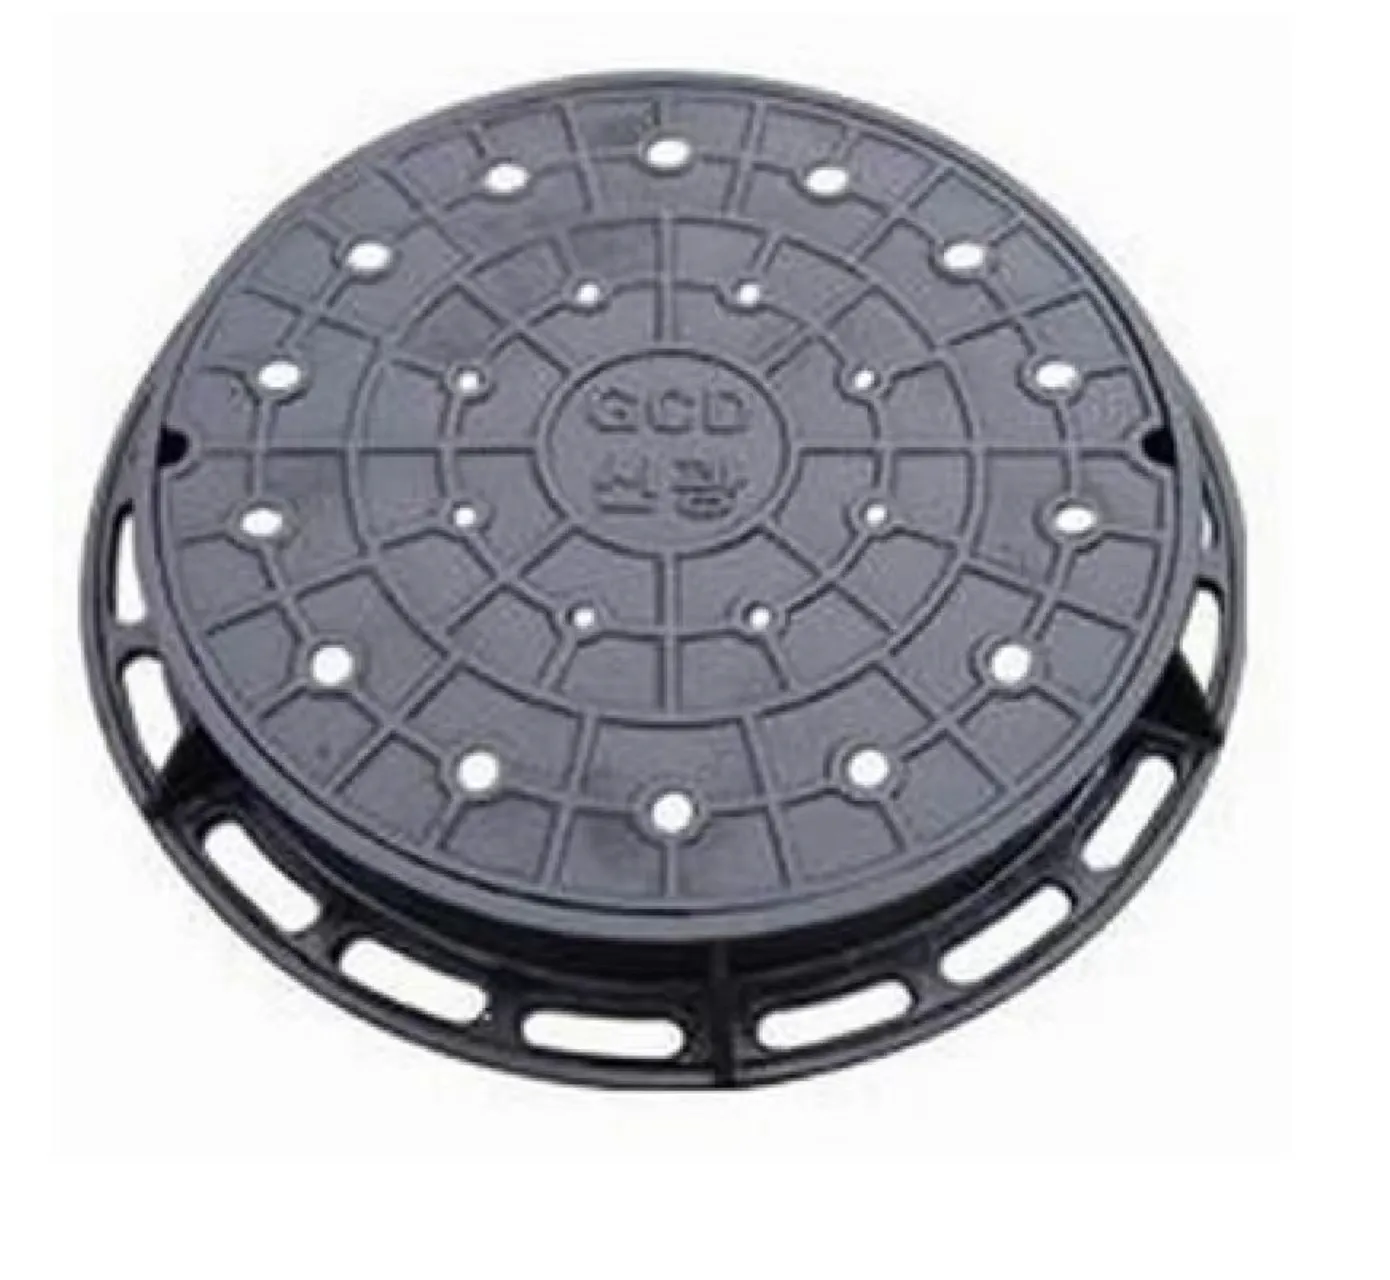 18 24 Manhole Cover D400 Casted Ductile Iron Manhole Cover Cast Aluminium Manhole Cover